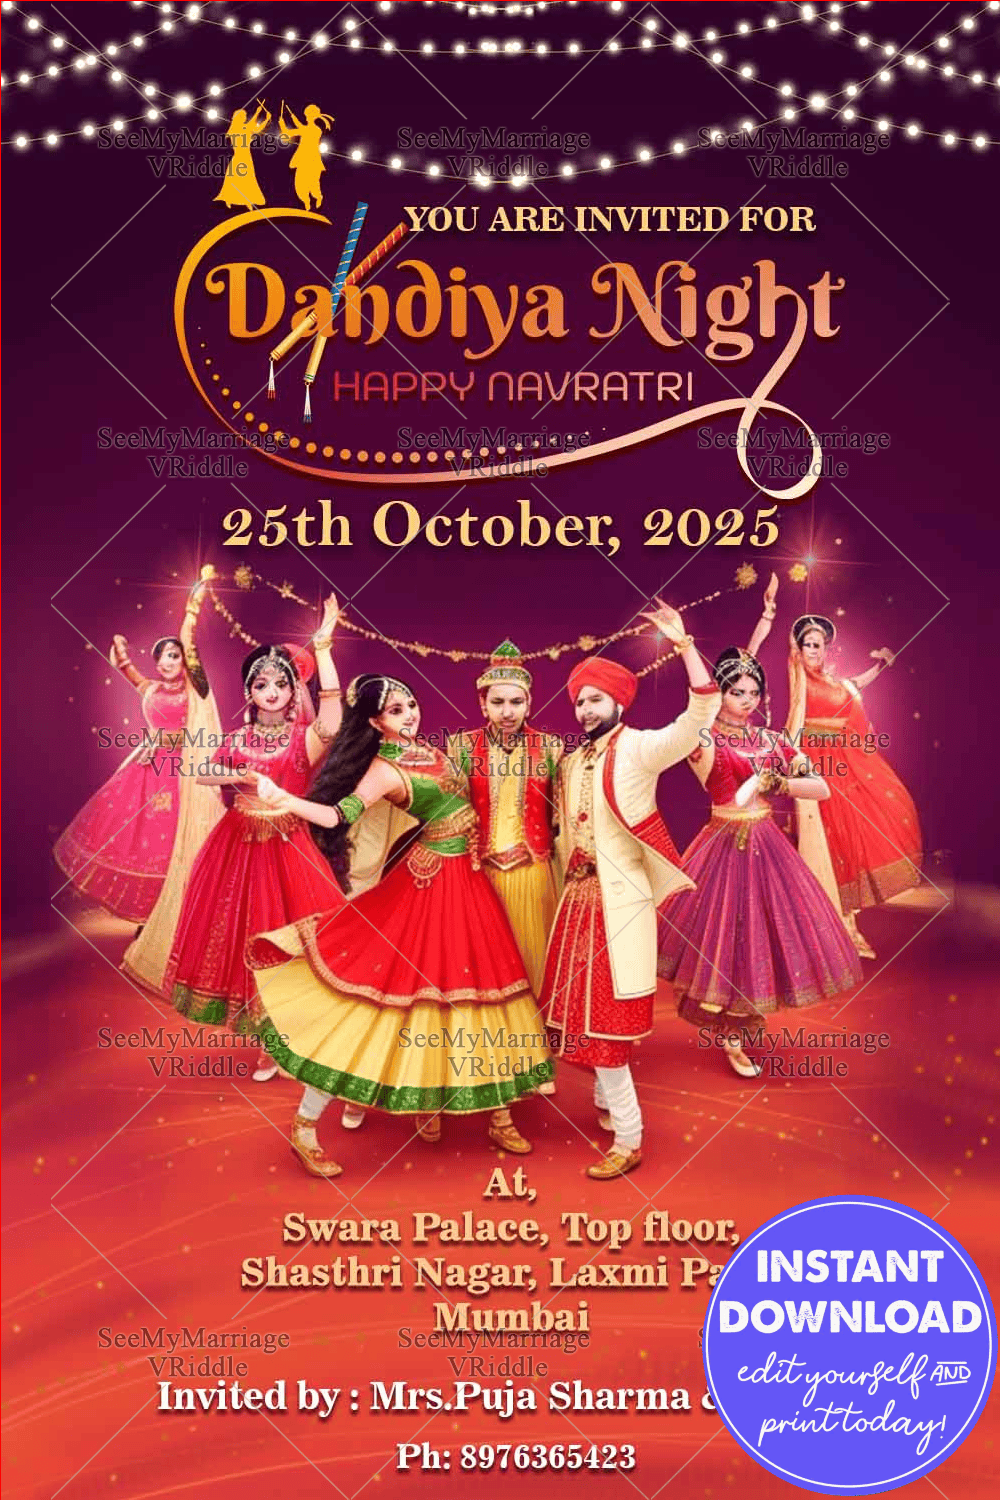 Dandiya-Night-Happy-Navratri-Invitation